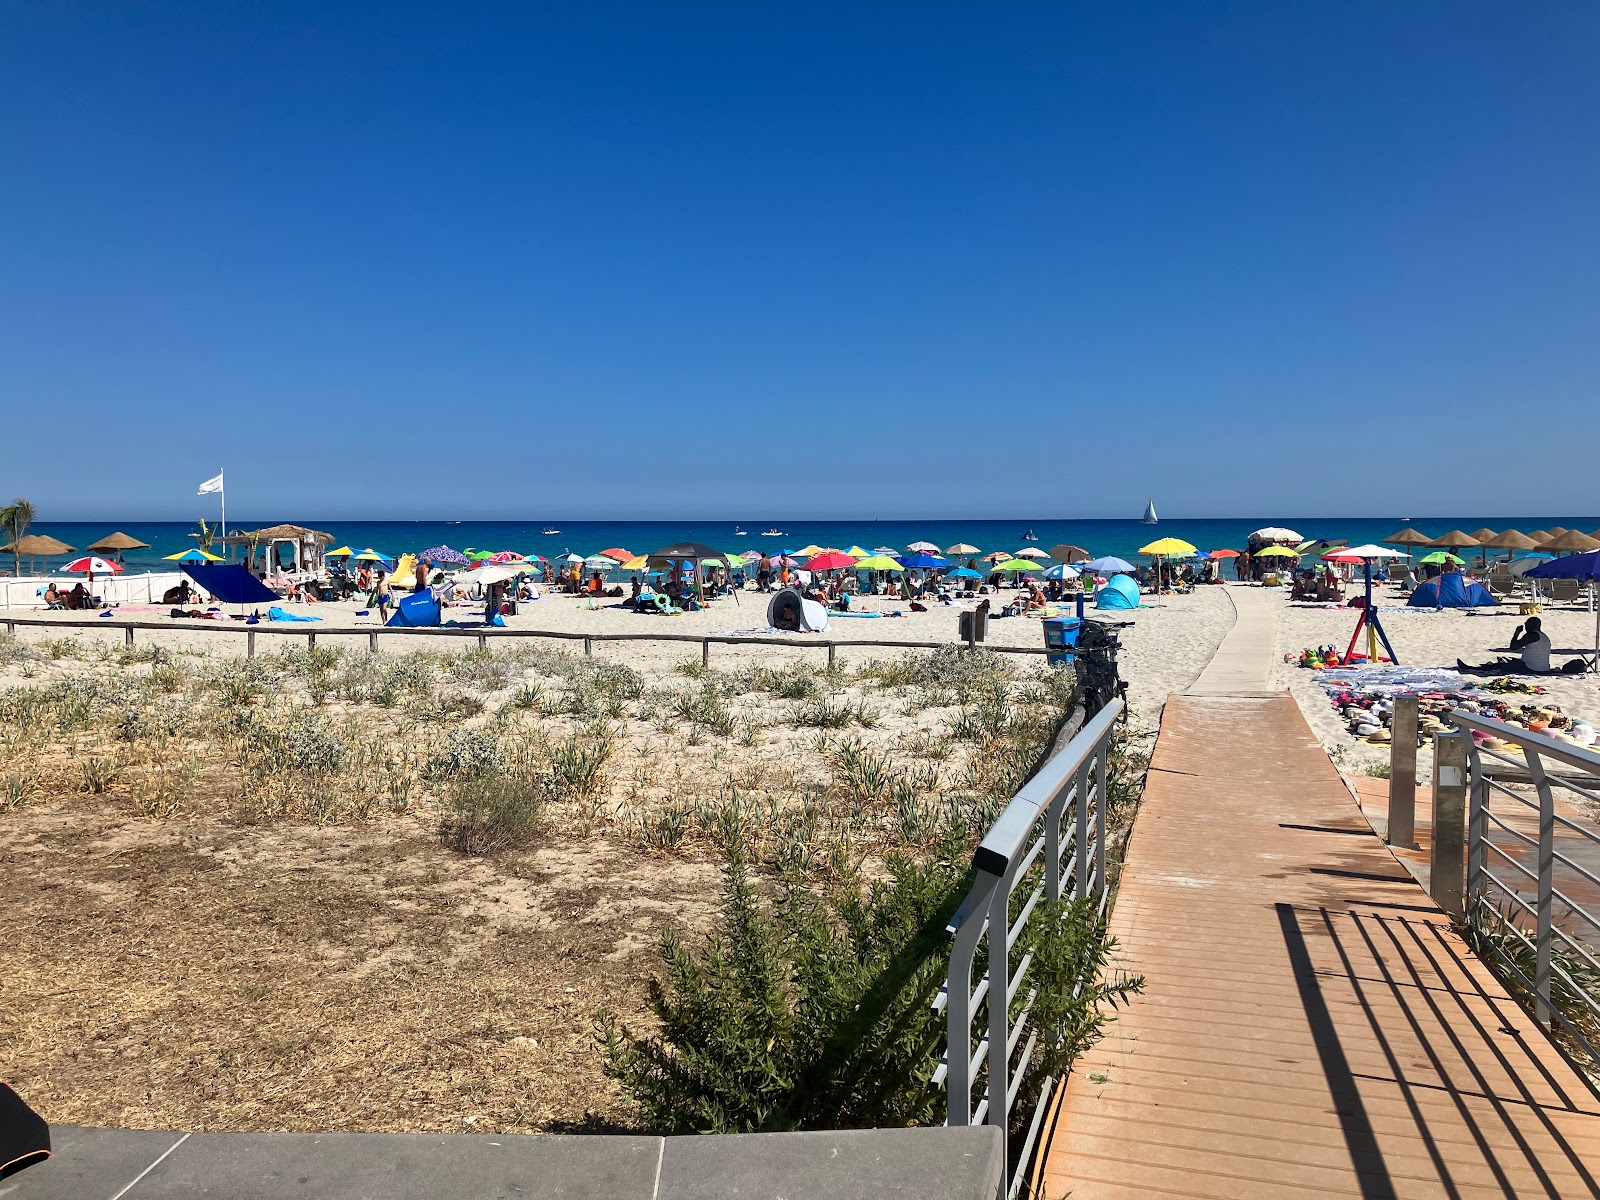 Foto av Spiaggia di Simius med blå rent vatten yta